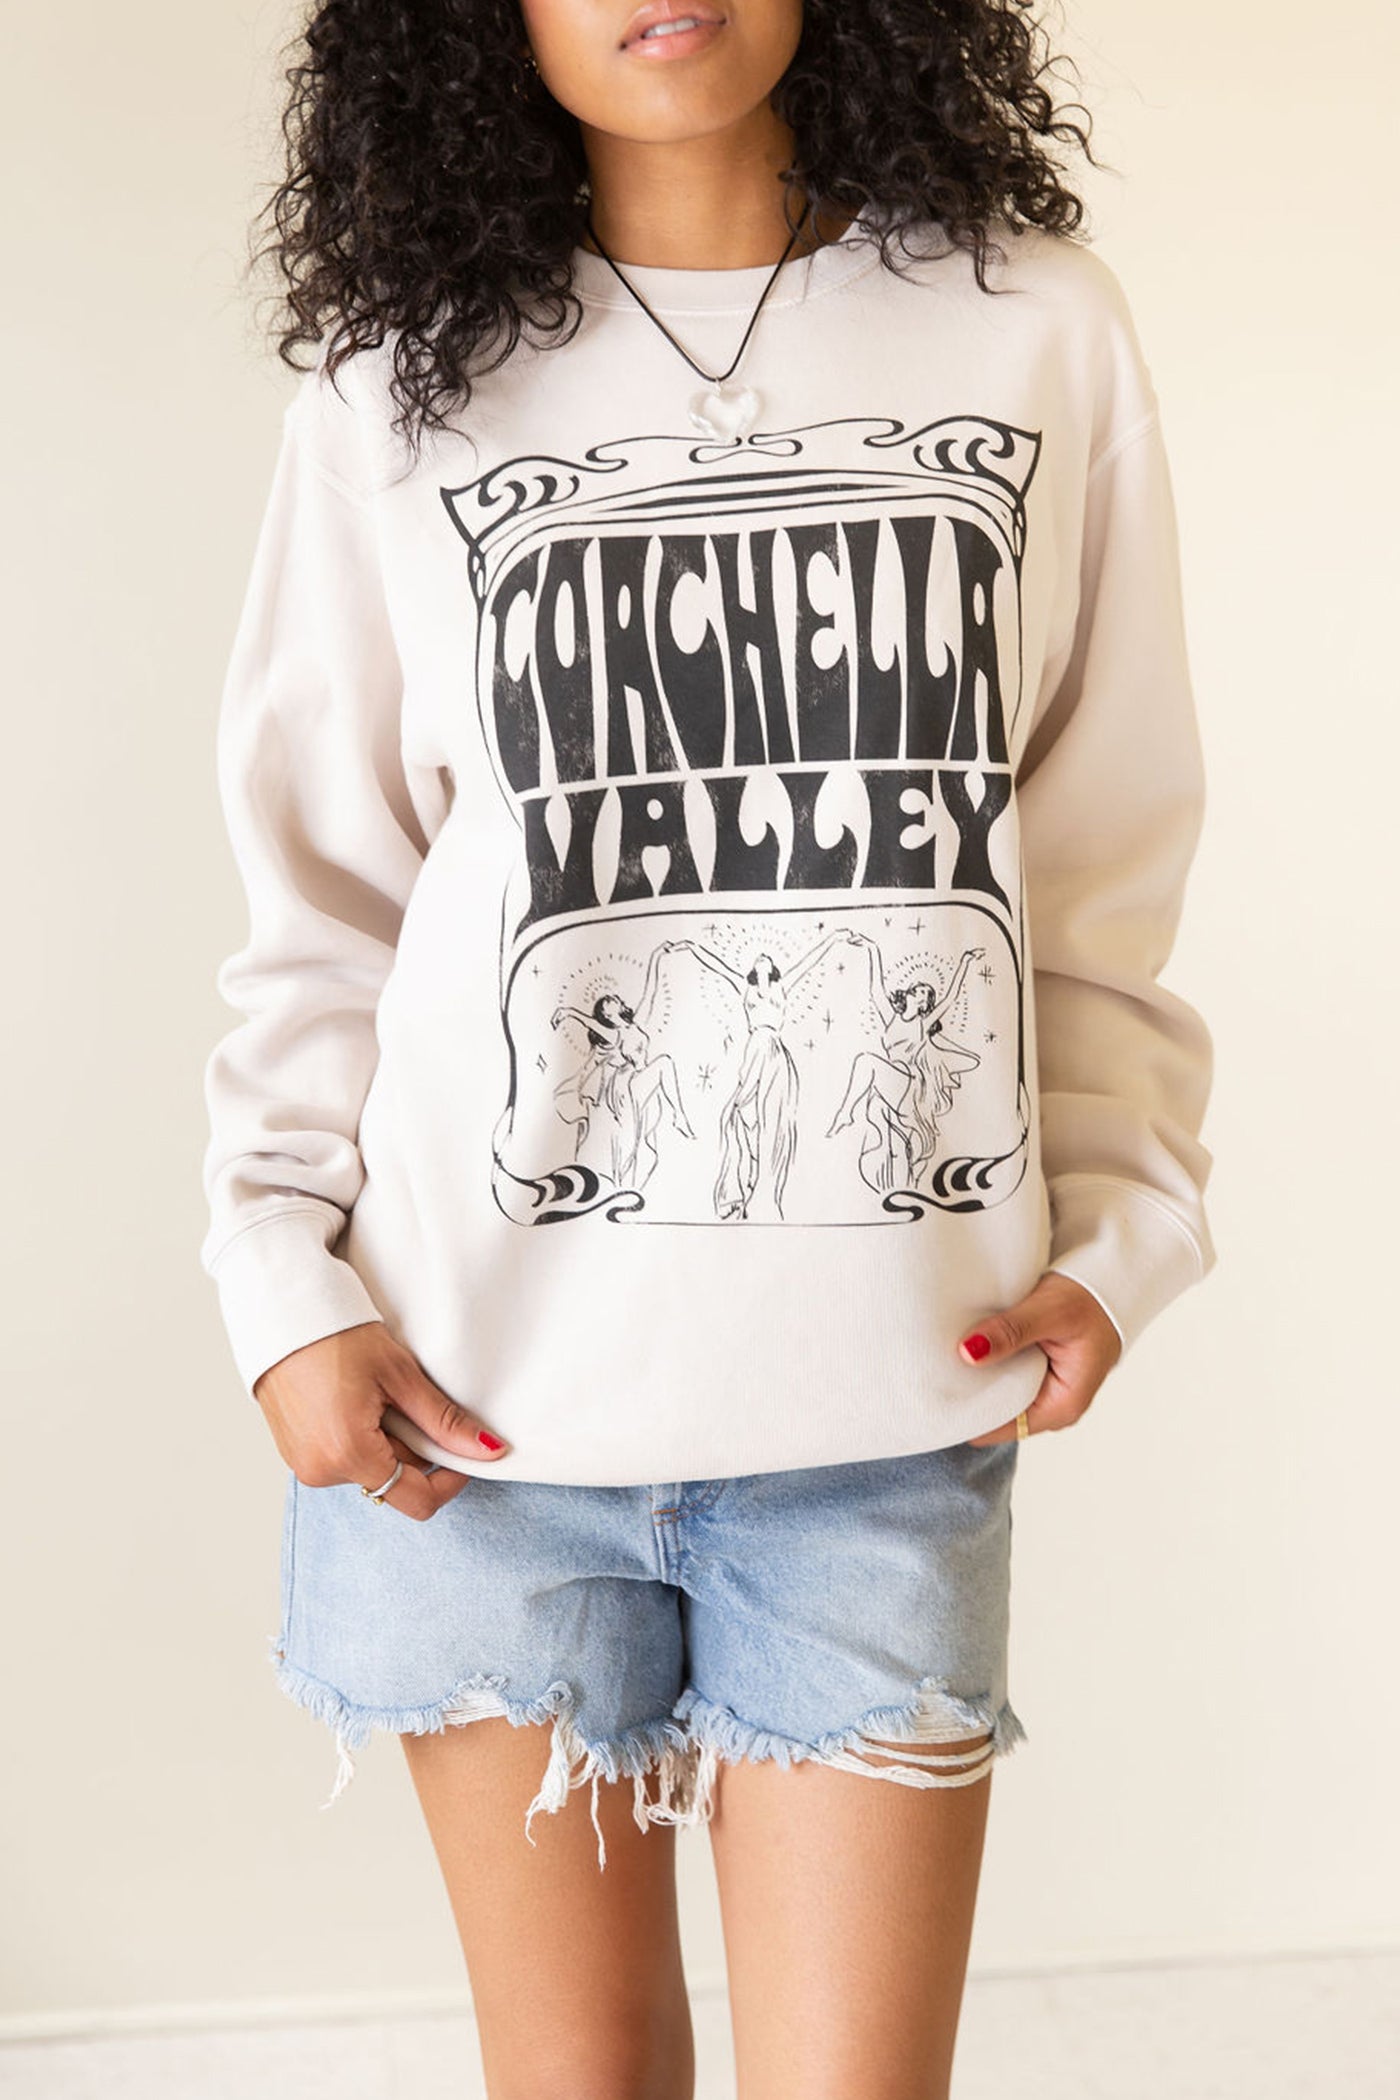 Coachella Valley Graphic Sweater